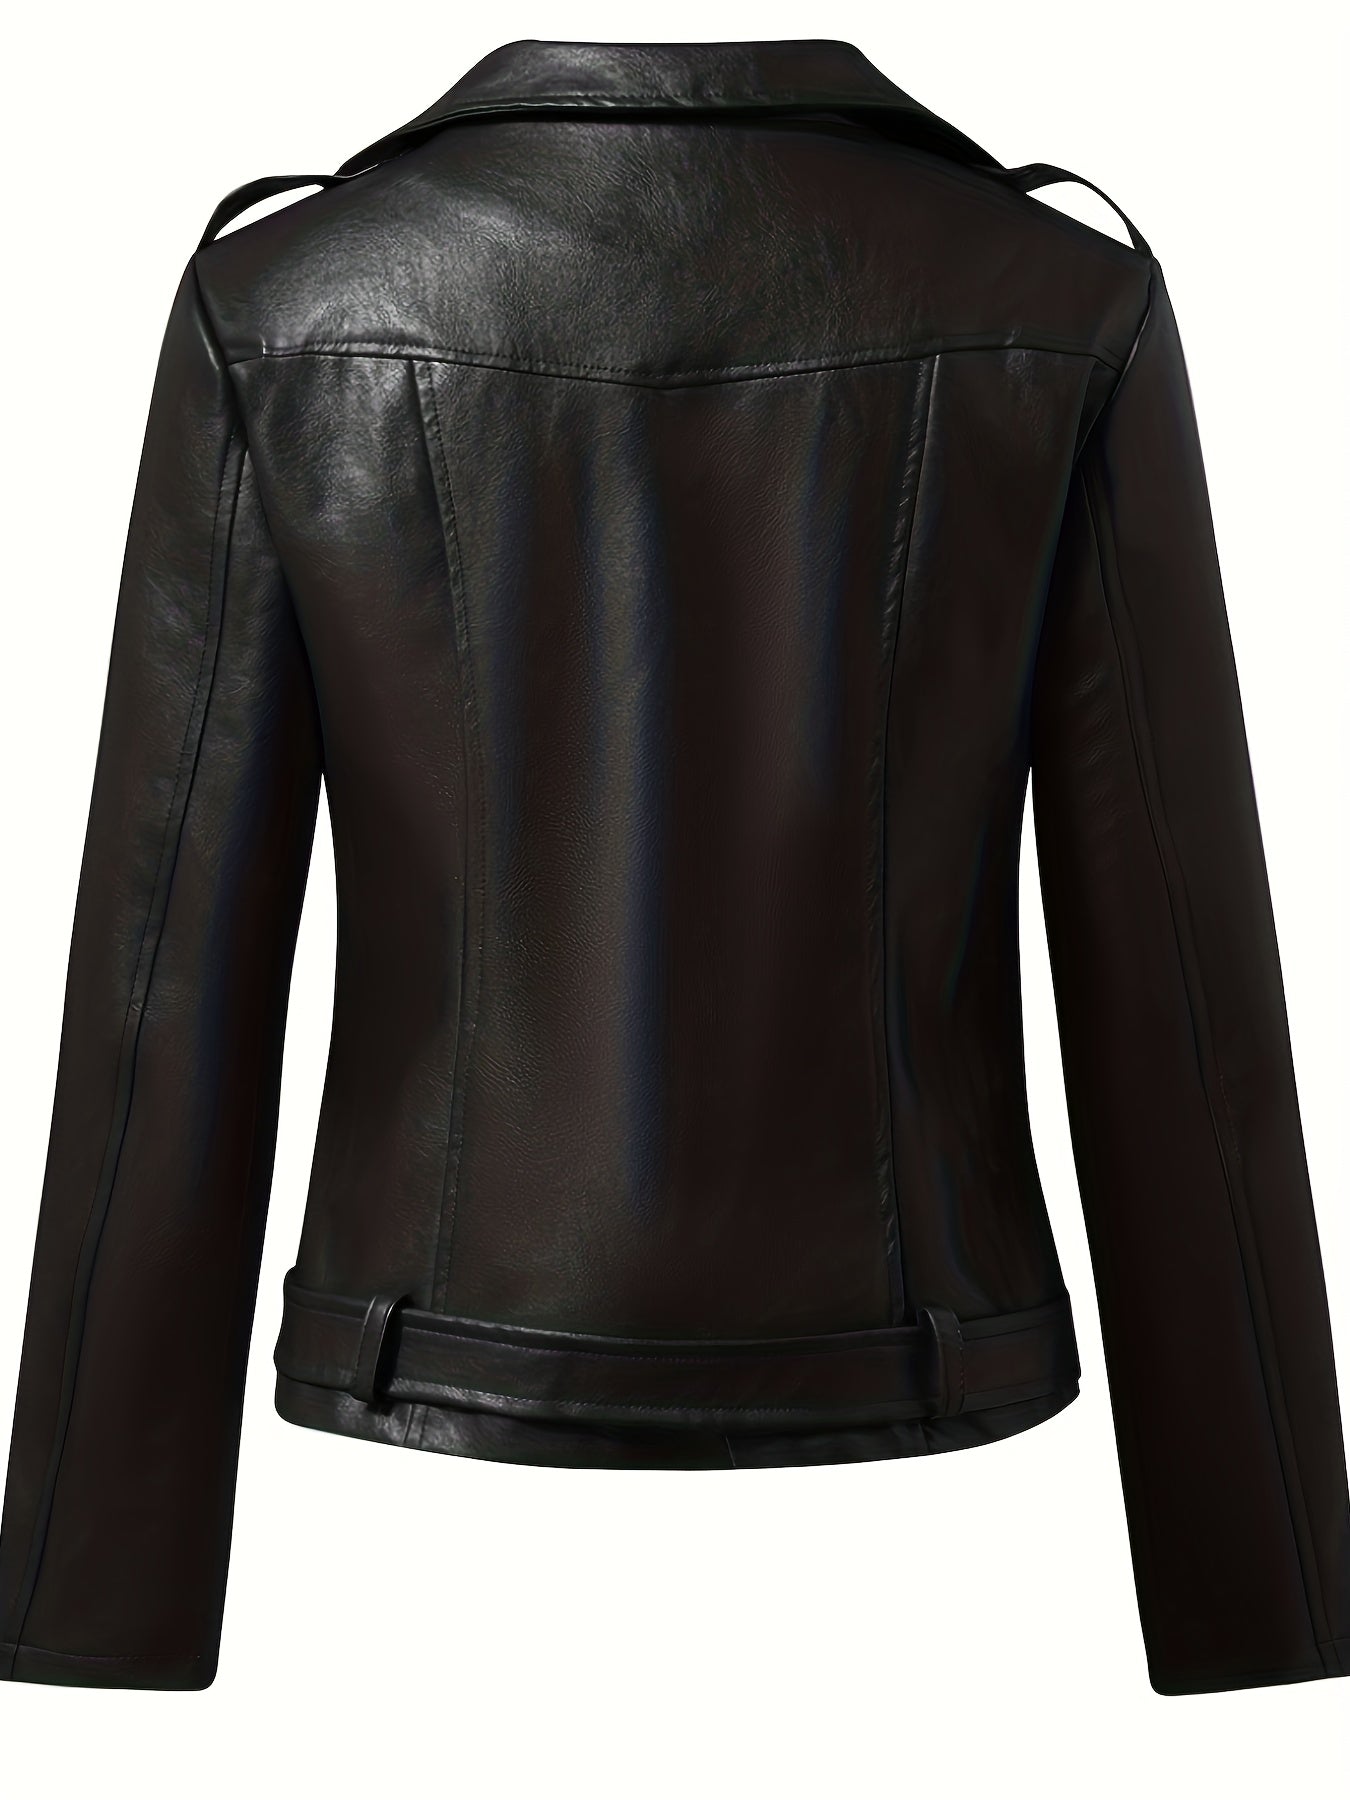 Antmvs Plus Size Street Style Jacket, Women's Plus Solid PU Leather Buckle Long Sleeve Zipper Lapel Collar Motorcycle Jacket